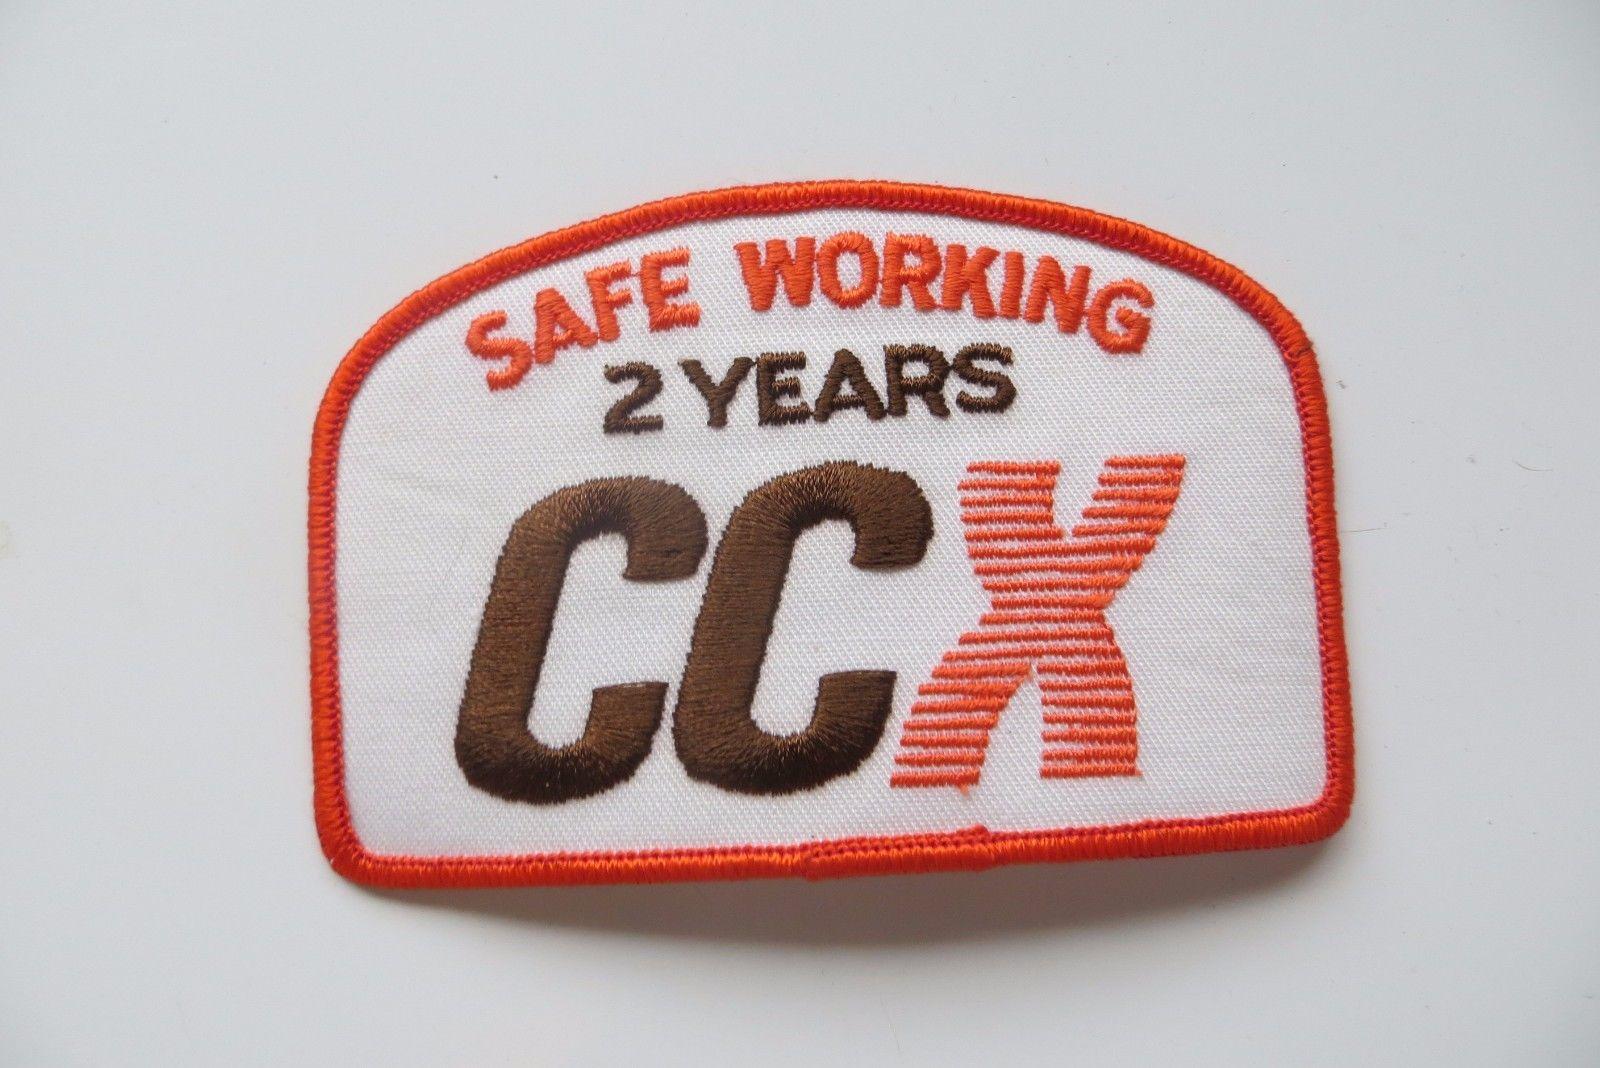 CCX Logo - CCX SAFE WORKING 2 YEARS, ORIGINAL award co logo trucking semi driver